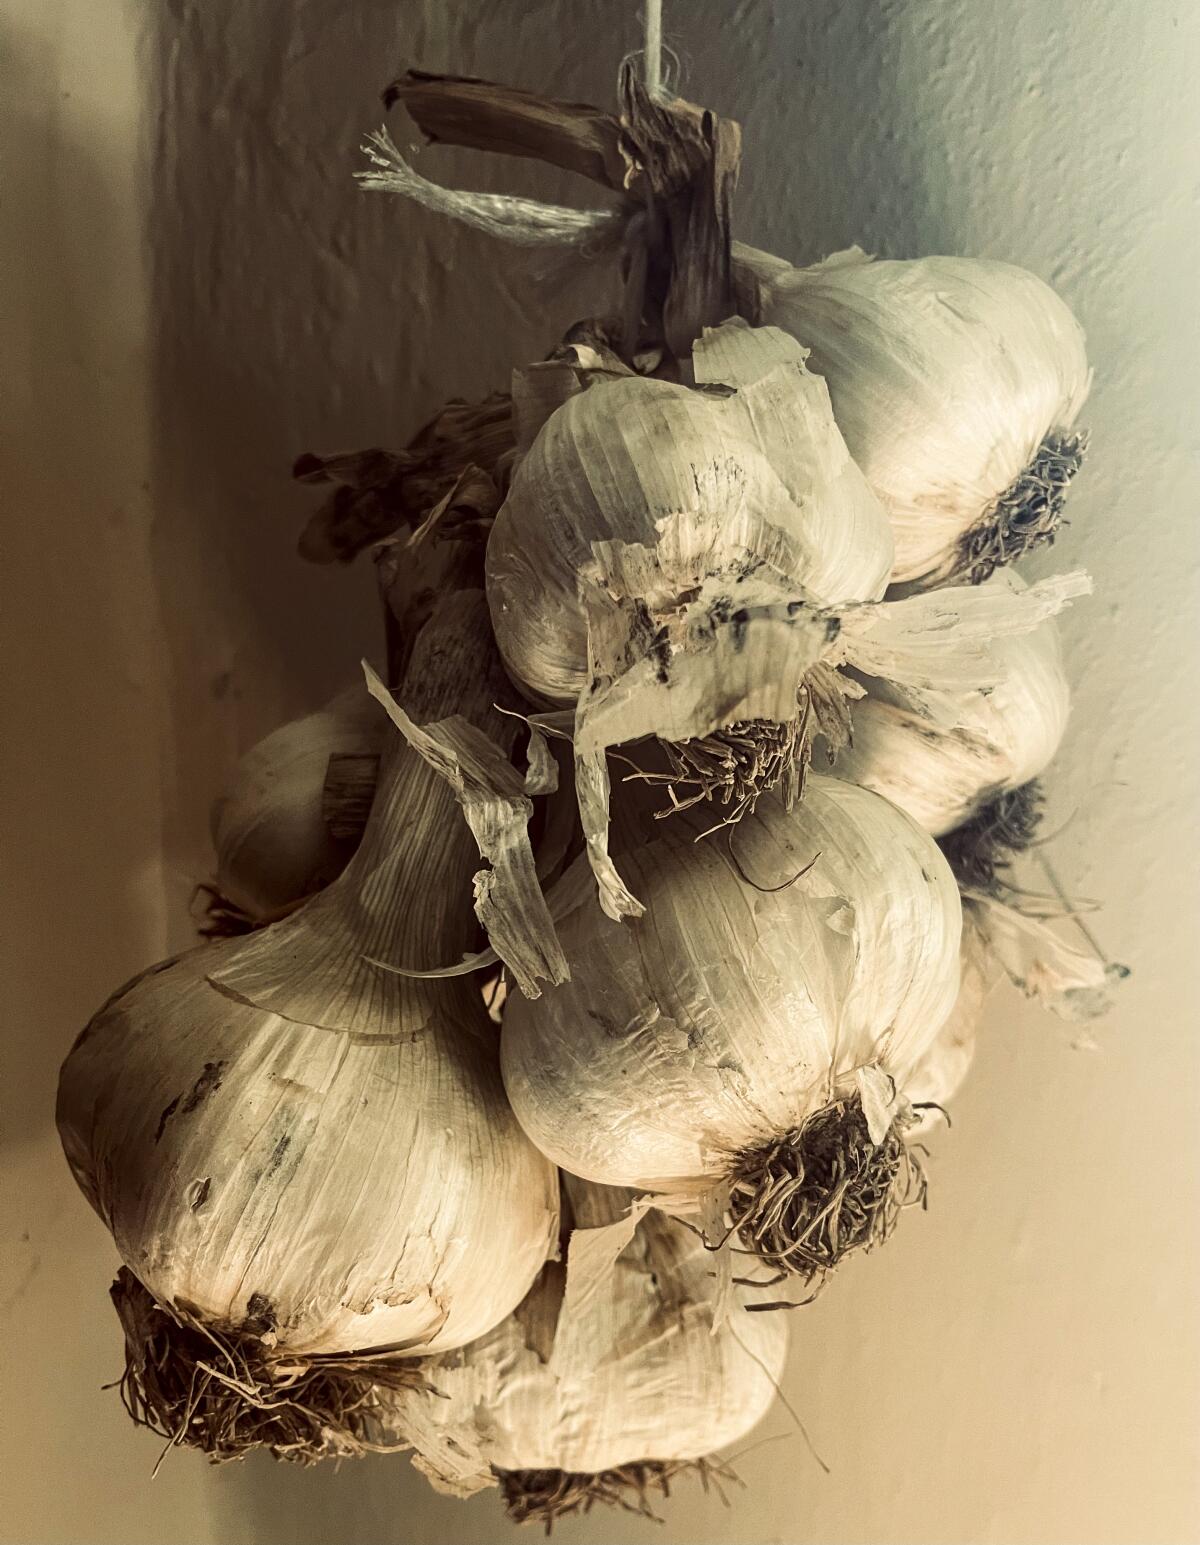 Closeup of bulbs of garlic.